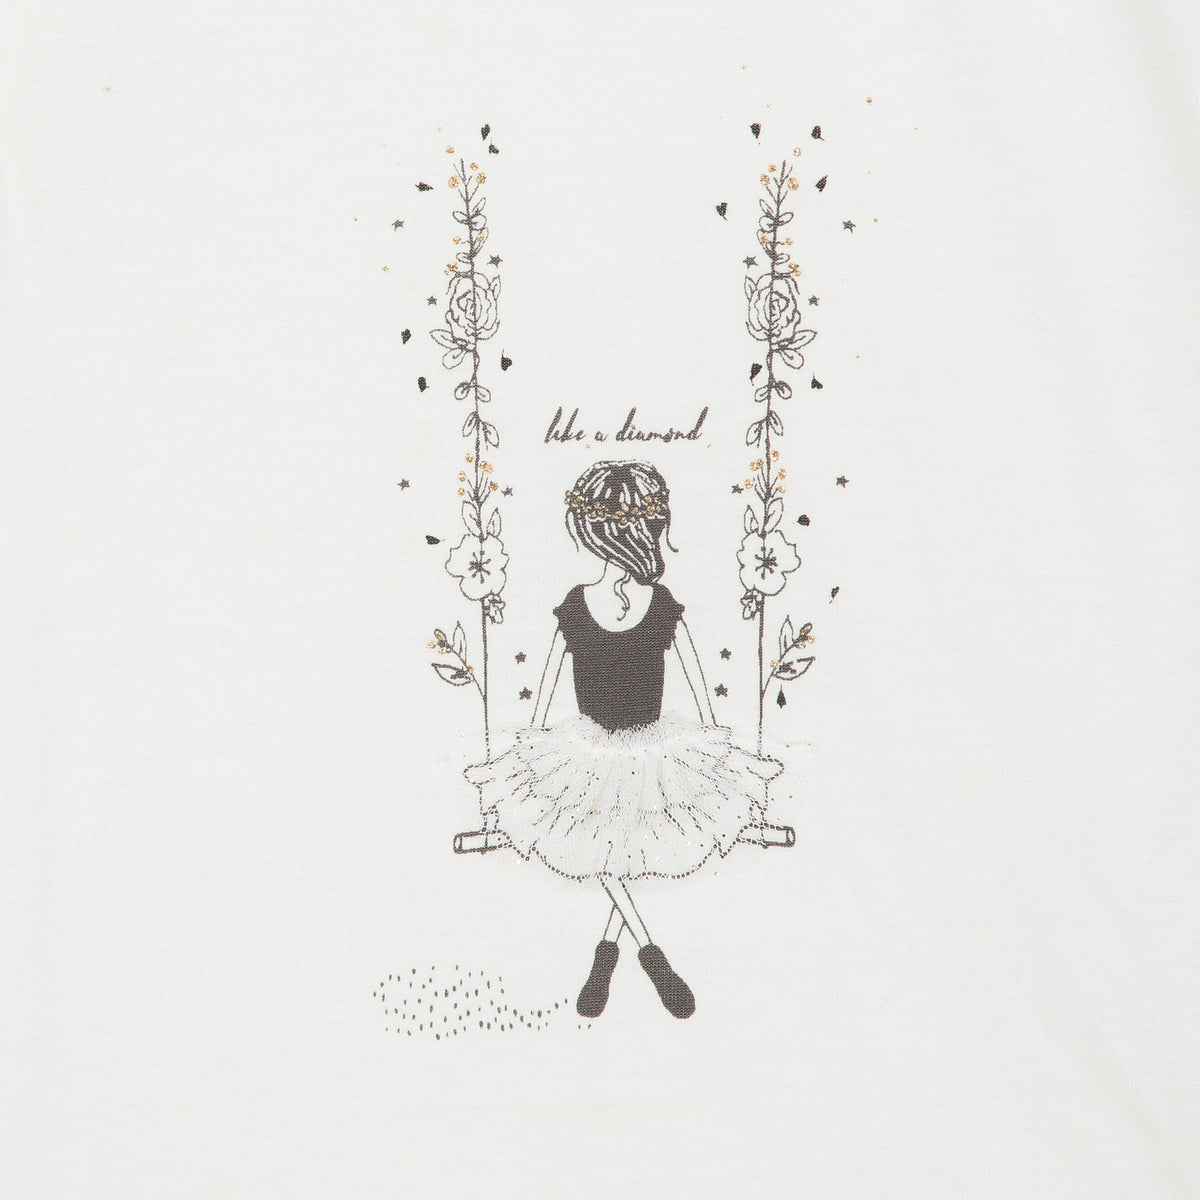 Girls “Swing” Whit T-Shirt